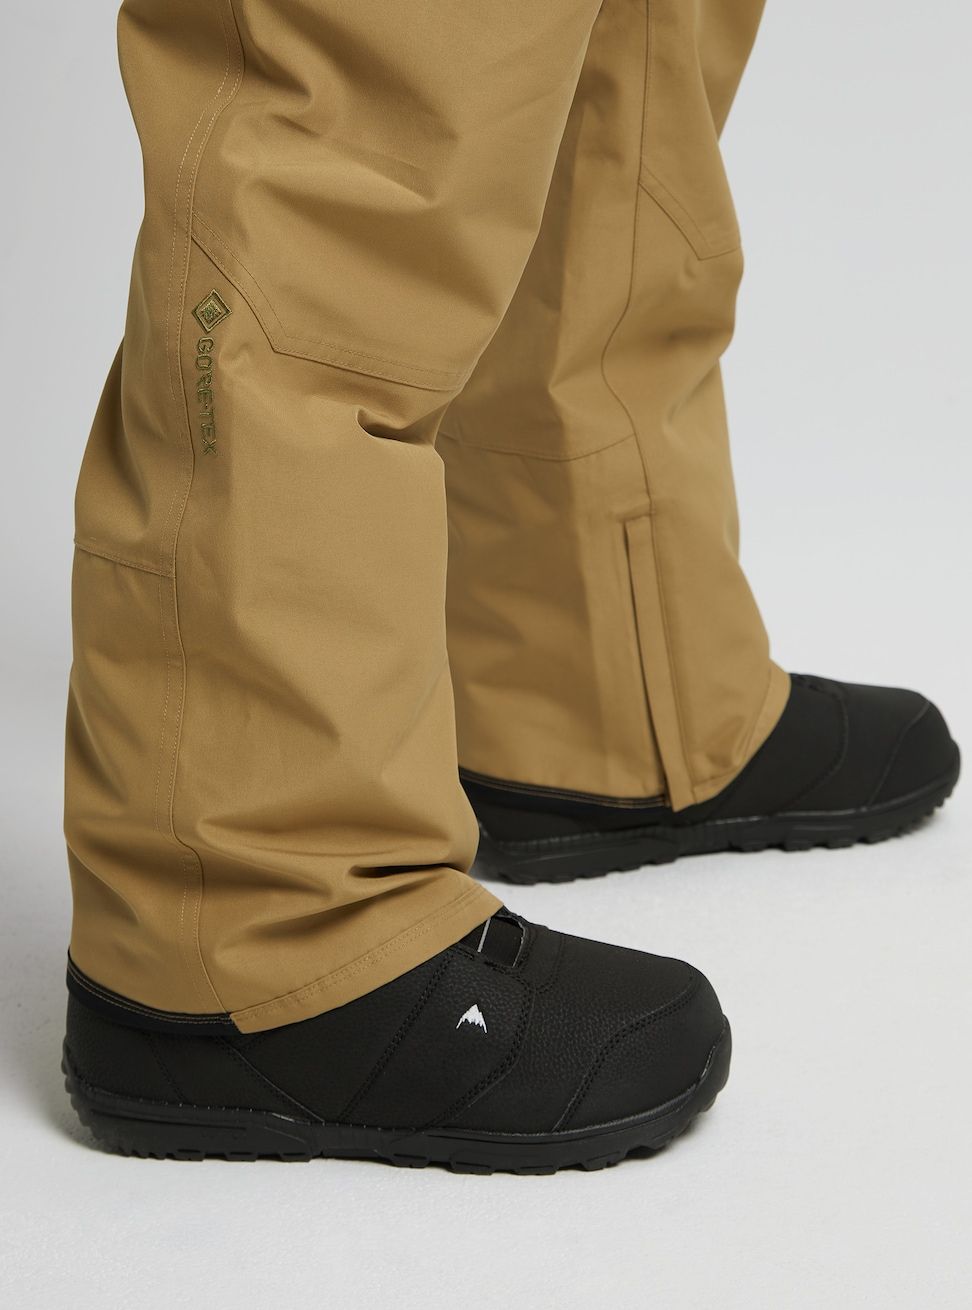 Men's Burton Reserve GORE-TEX 2L Bib Pants Kelp Snow Pants